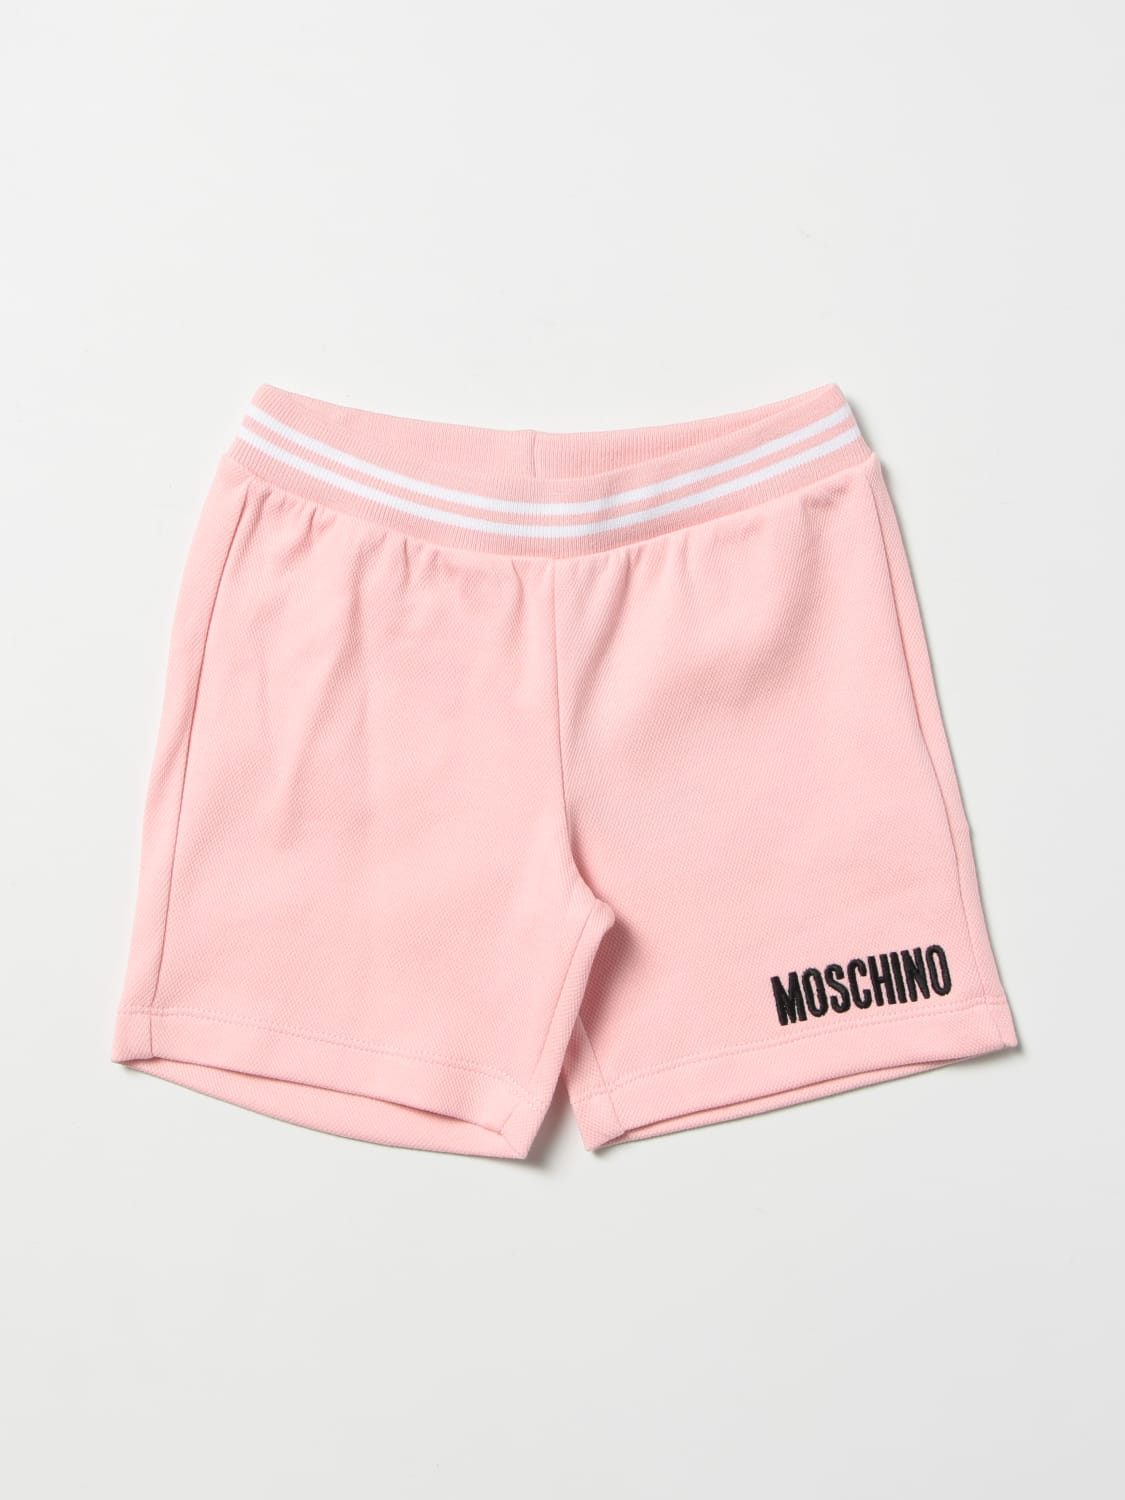 MOSCHINO, Pink Men's Boxer